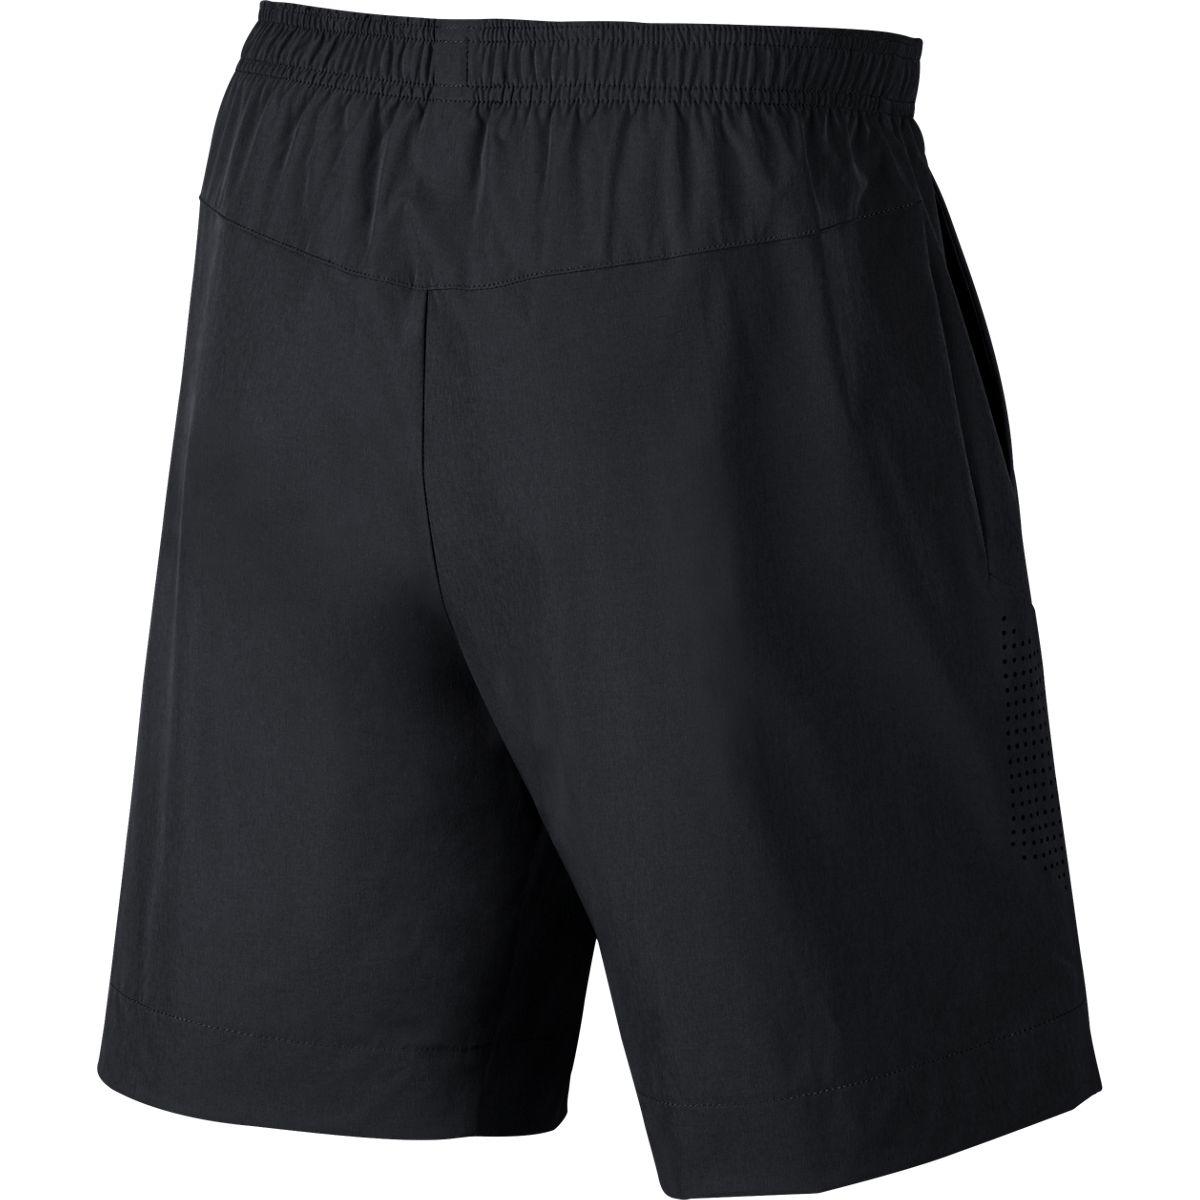 Nike Mens Premier Gladiator Shorts - Black/Ivory - Tennisnuts.com